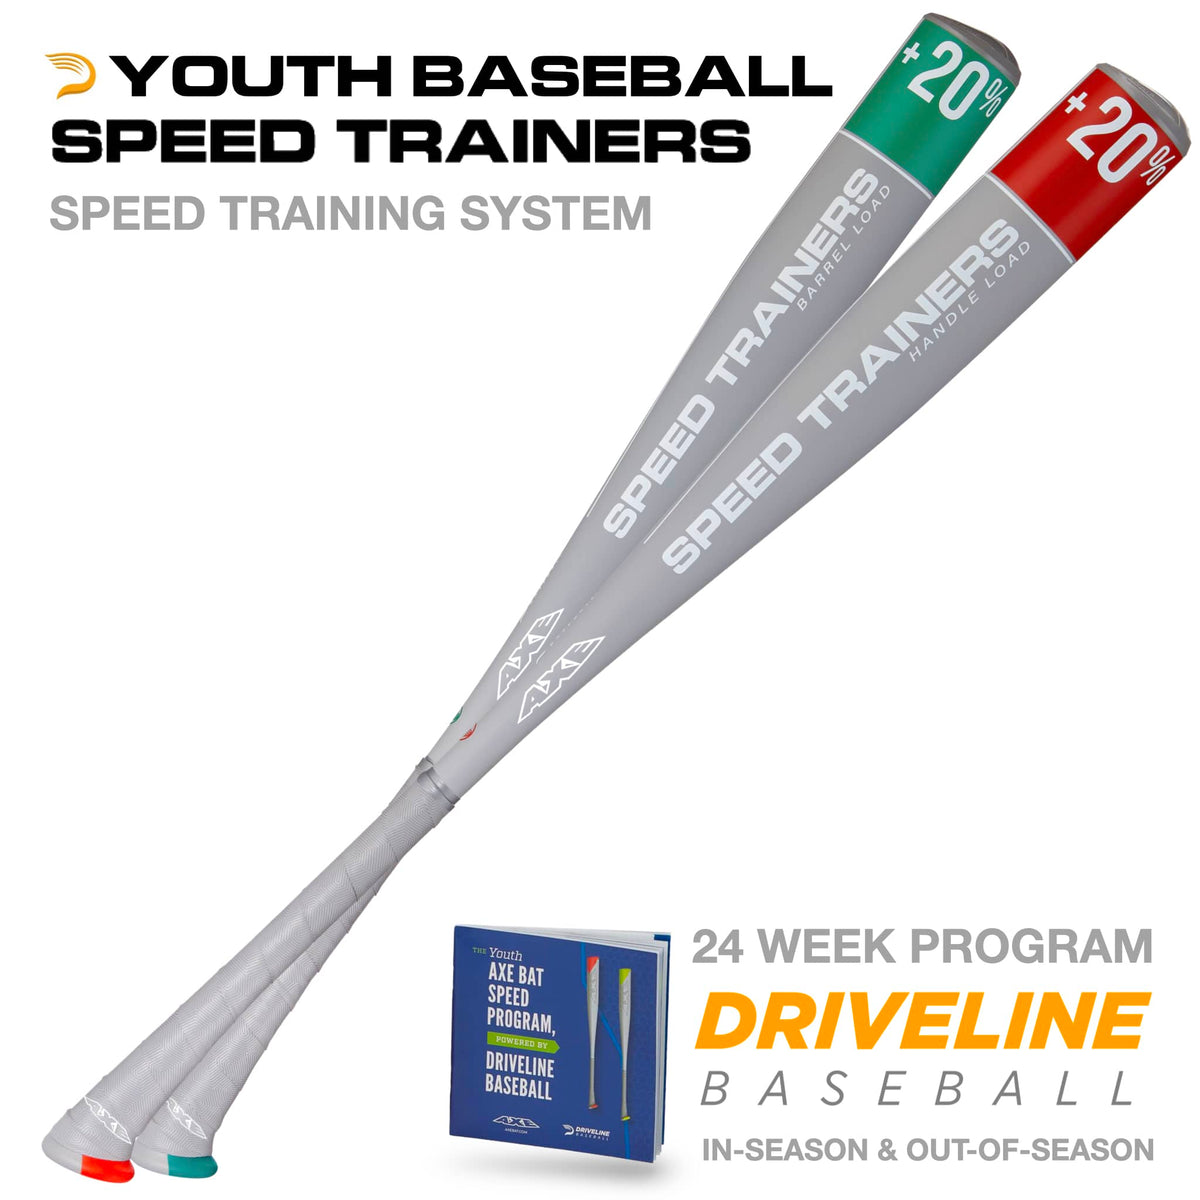 Driveline Bat Speed Trainers - Driveline Baseball